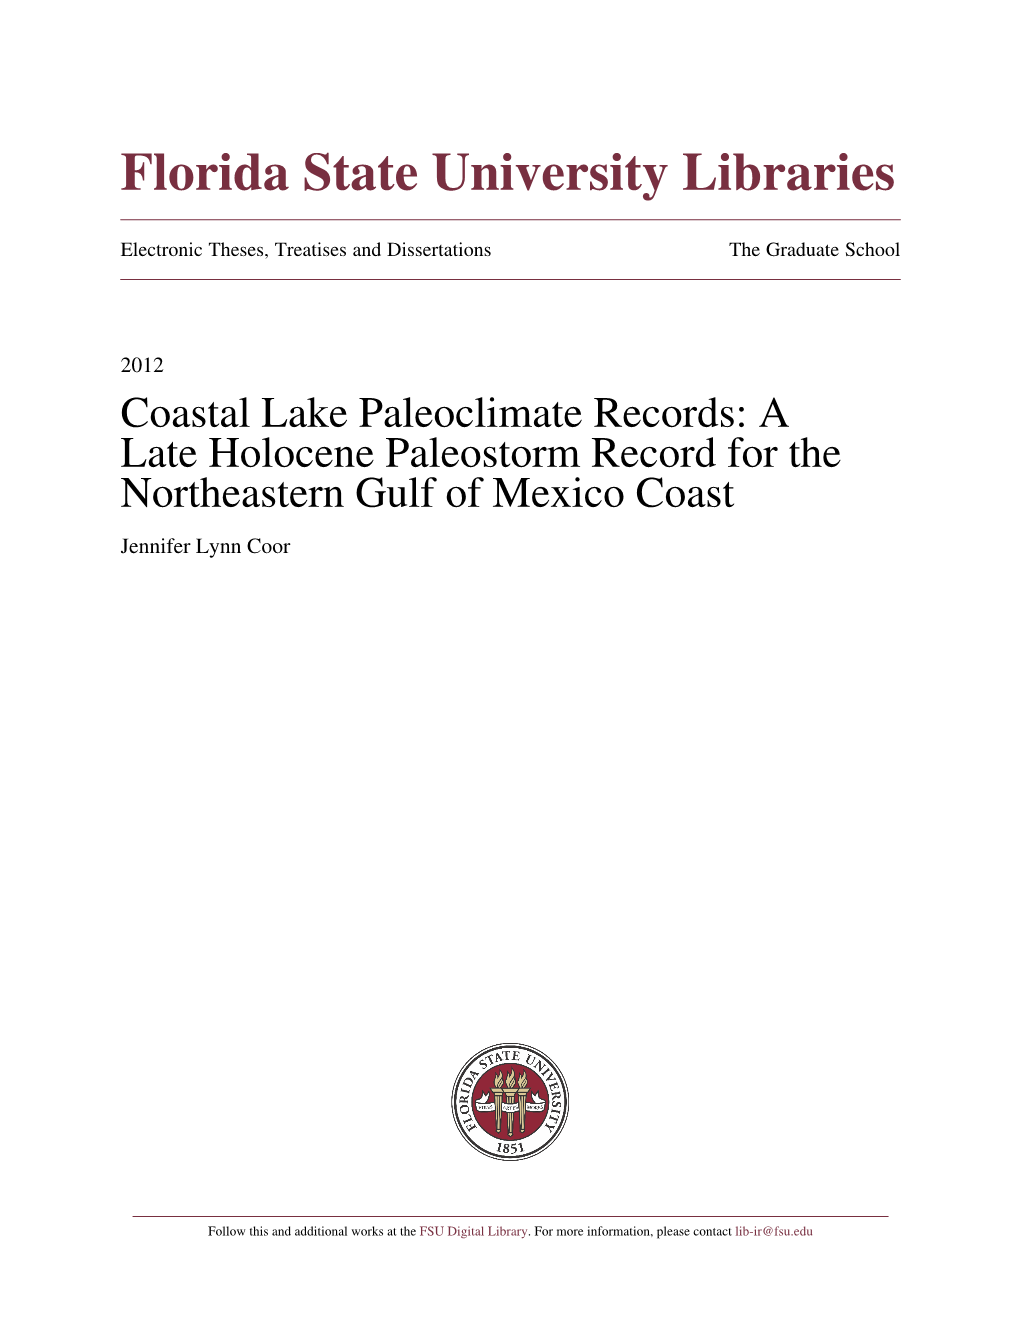 Coastal Lake Paleoclimate Records: a Late Holocene Paleostorm Record for the Northeastern Gulf of Mexico Coast Jennifer Lynn Coor